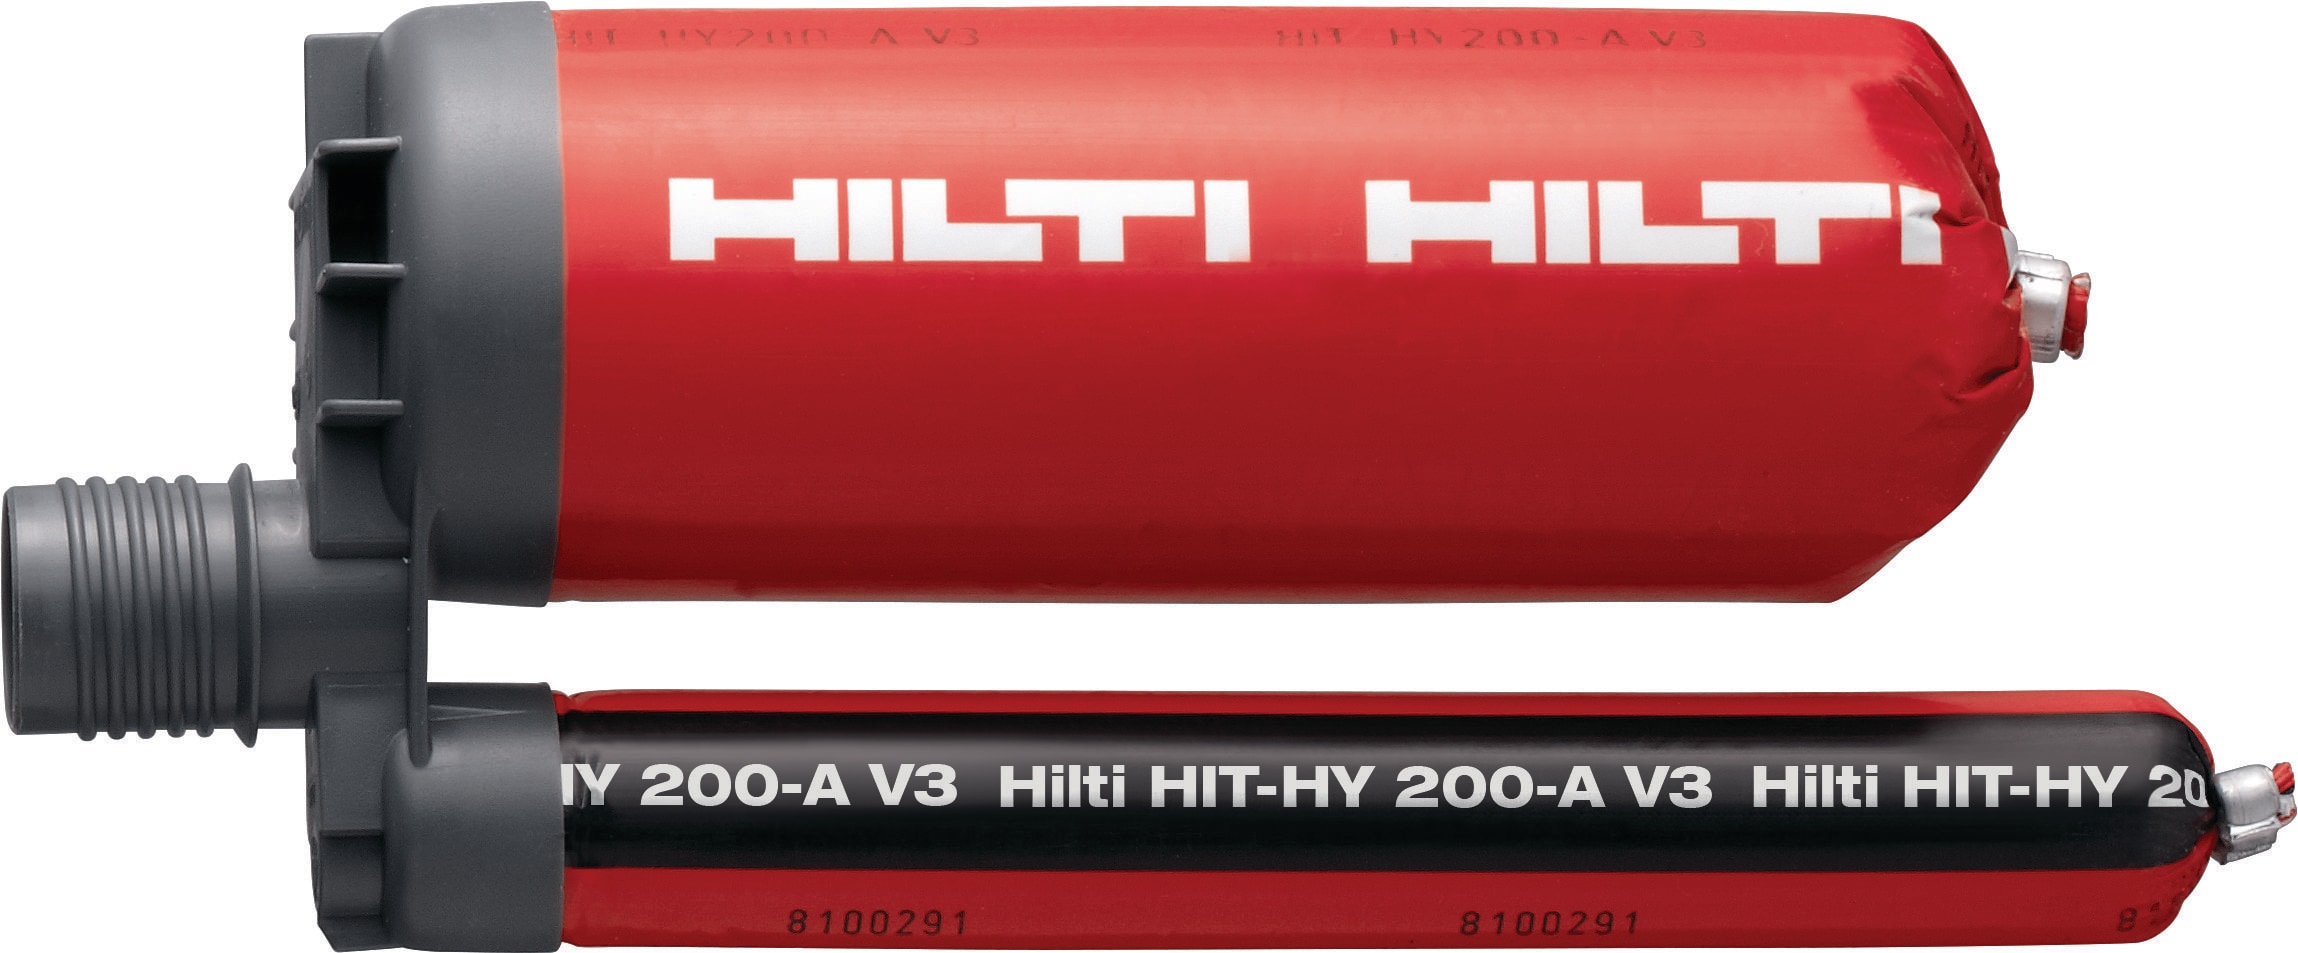 HIT-HY 200-A V3 Adhesive anchor - Chemical Anchors - Hilti USA